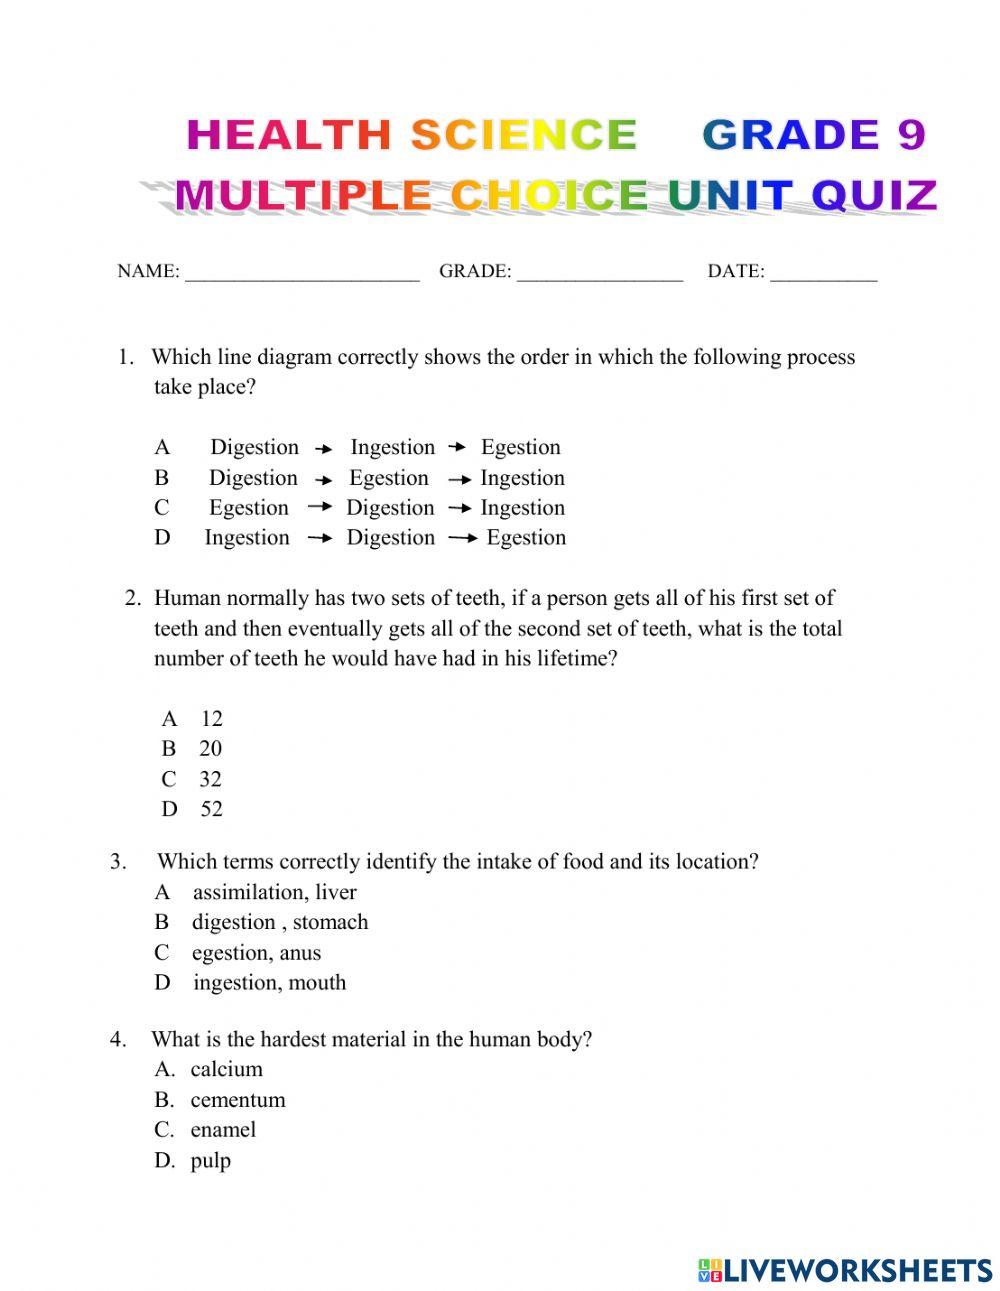 Health science multiple choice unit quiz